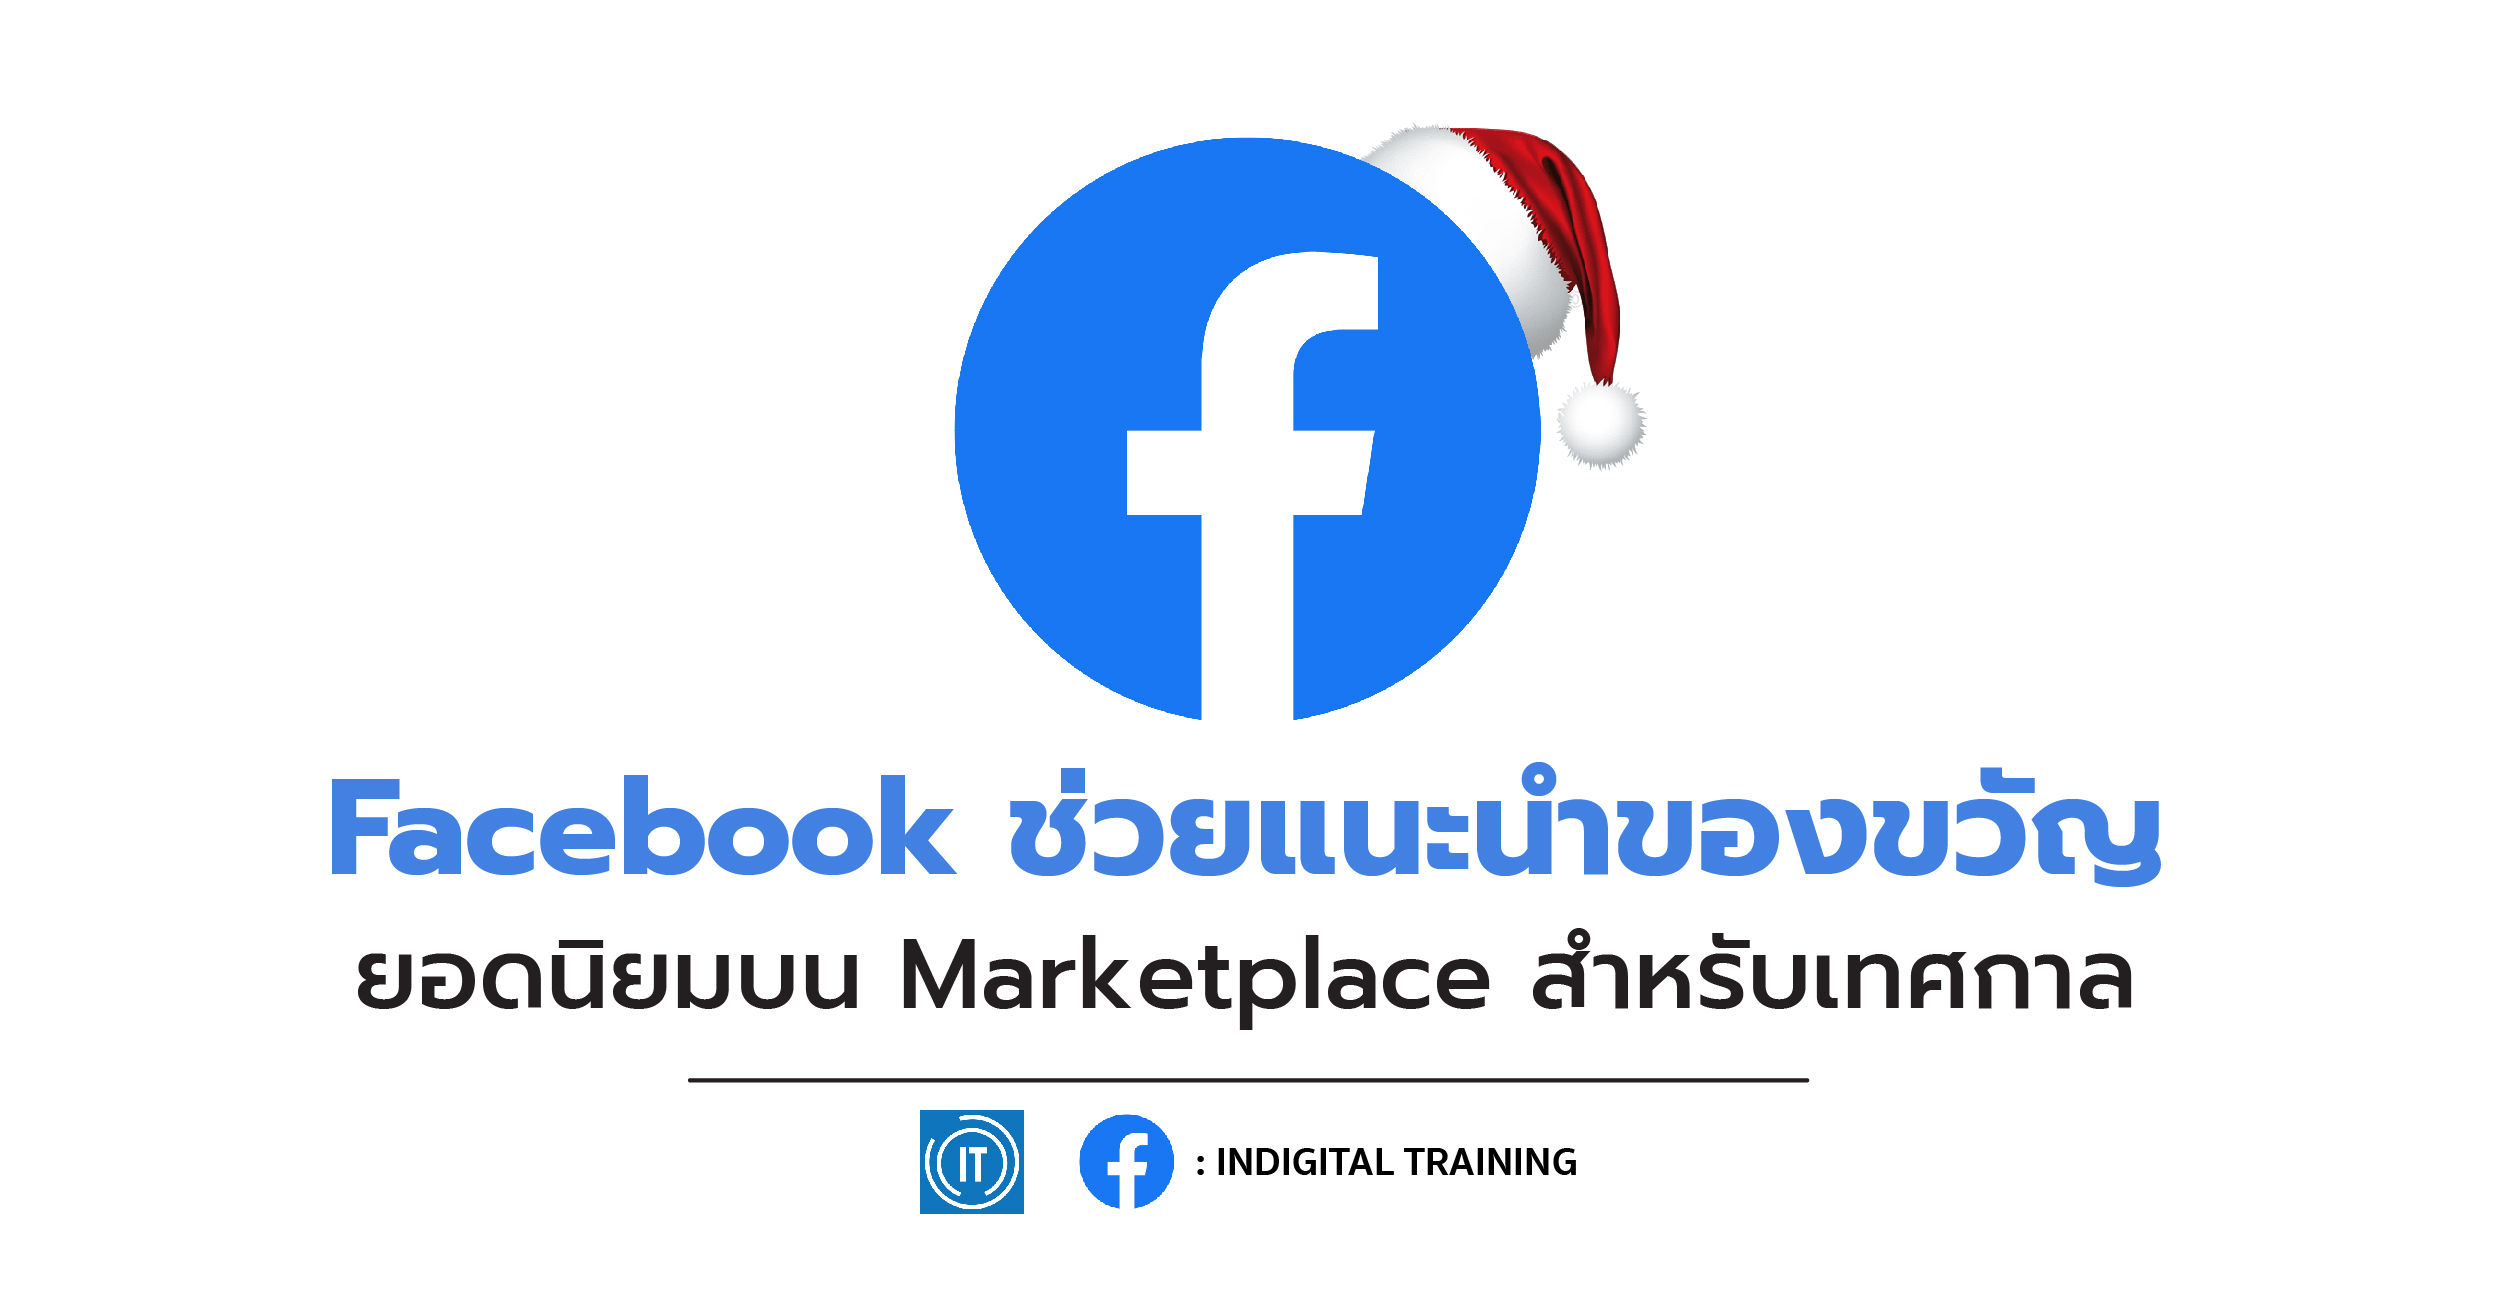 Facebook ช่วยแนะนำของขวัญยอดนิยมบน Marketplace สำหรับเทศกาล